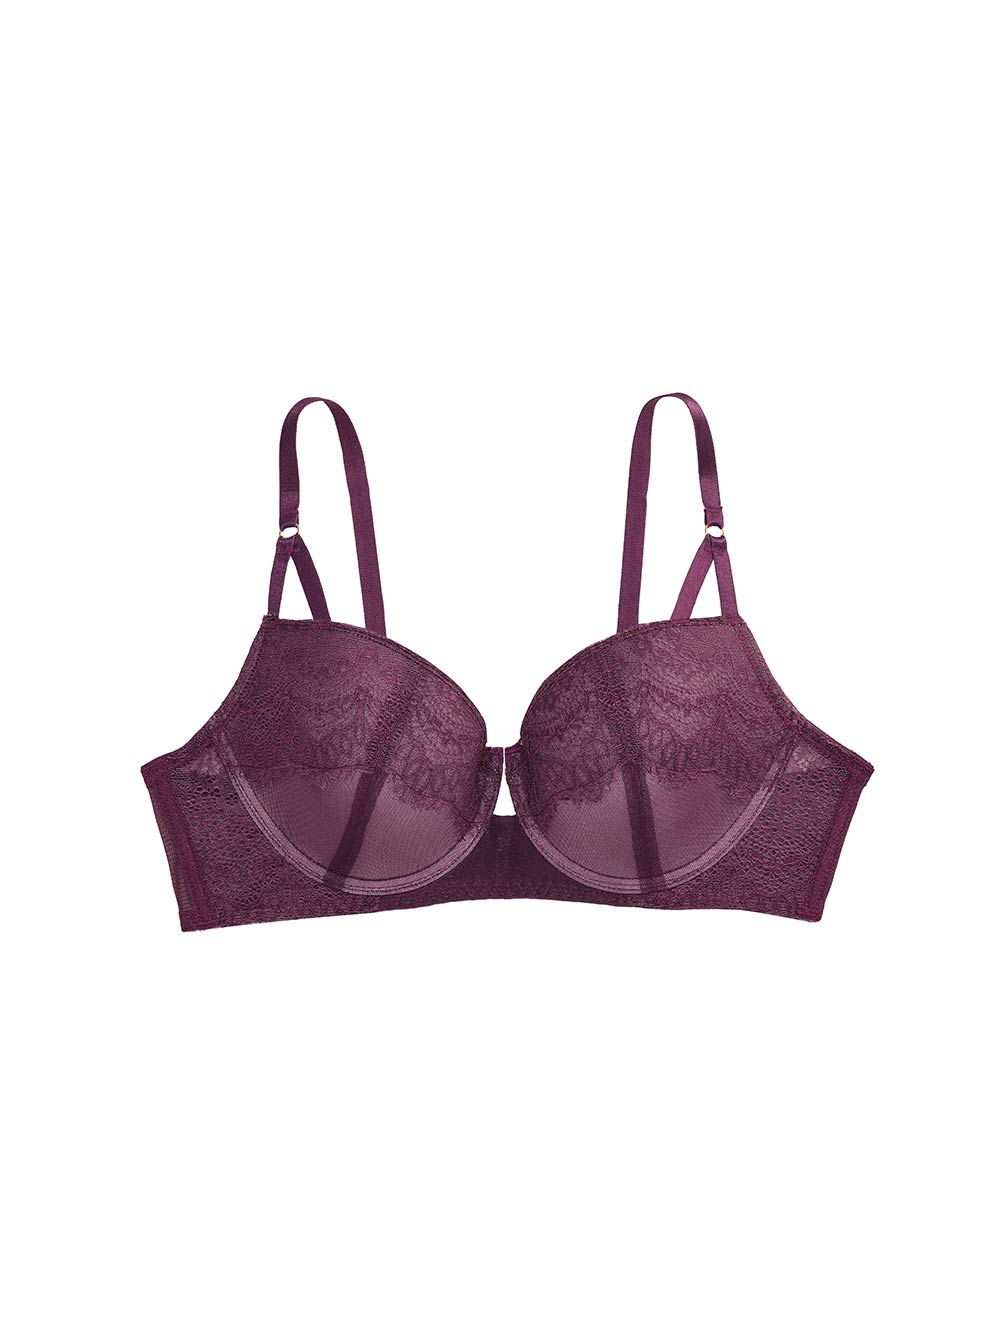 Dark Lilac/Purple Lace underwire push-up Bra- Size 30A